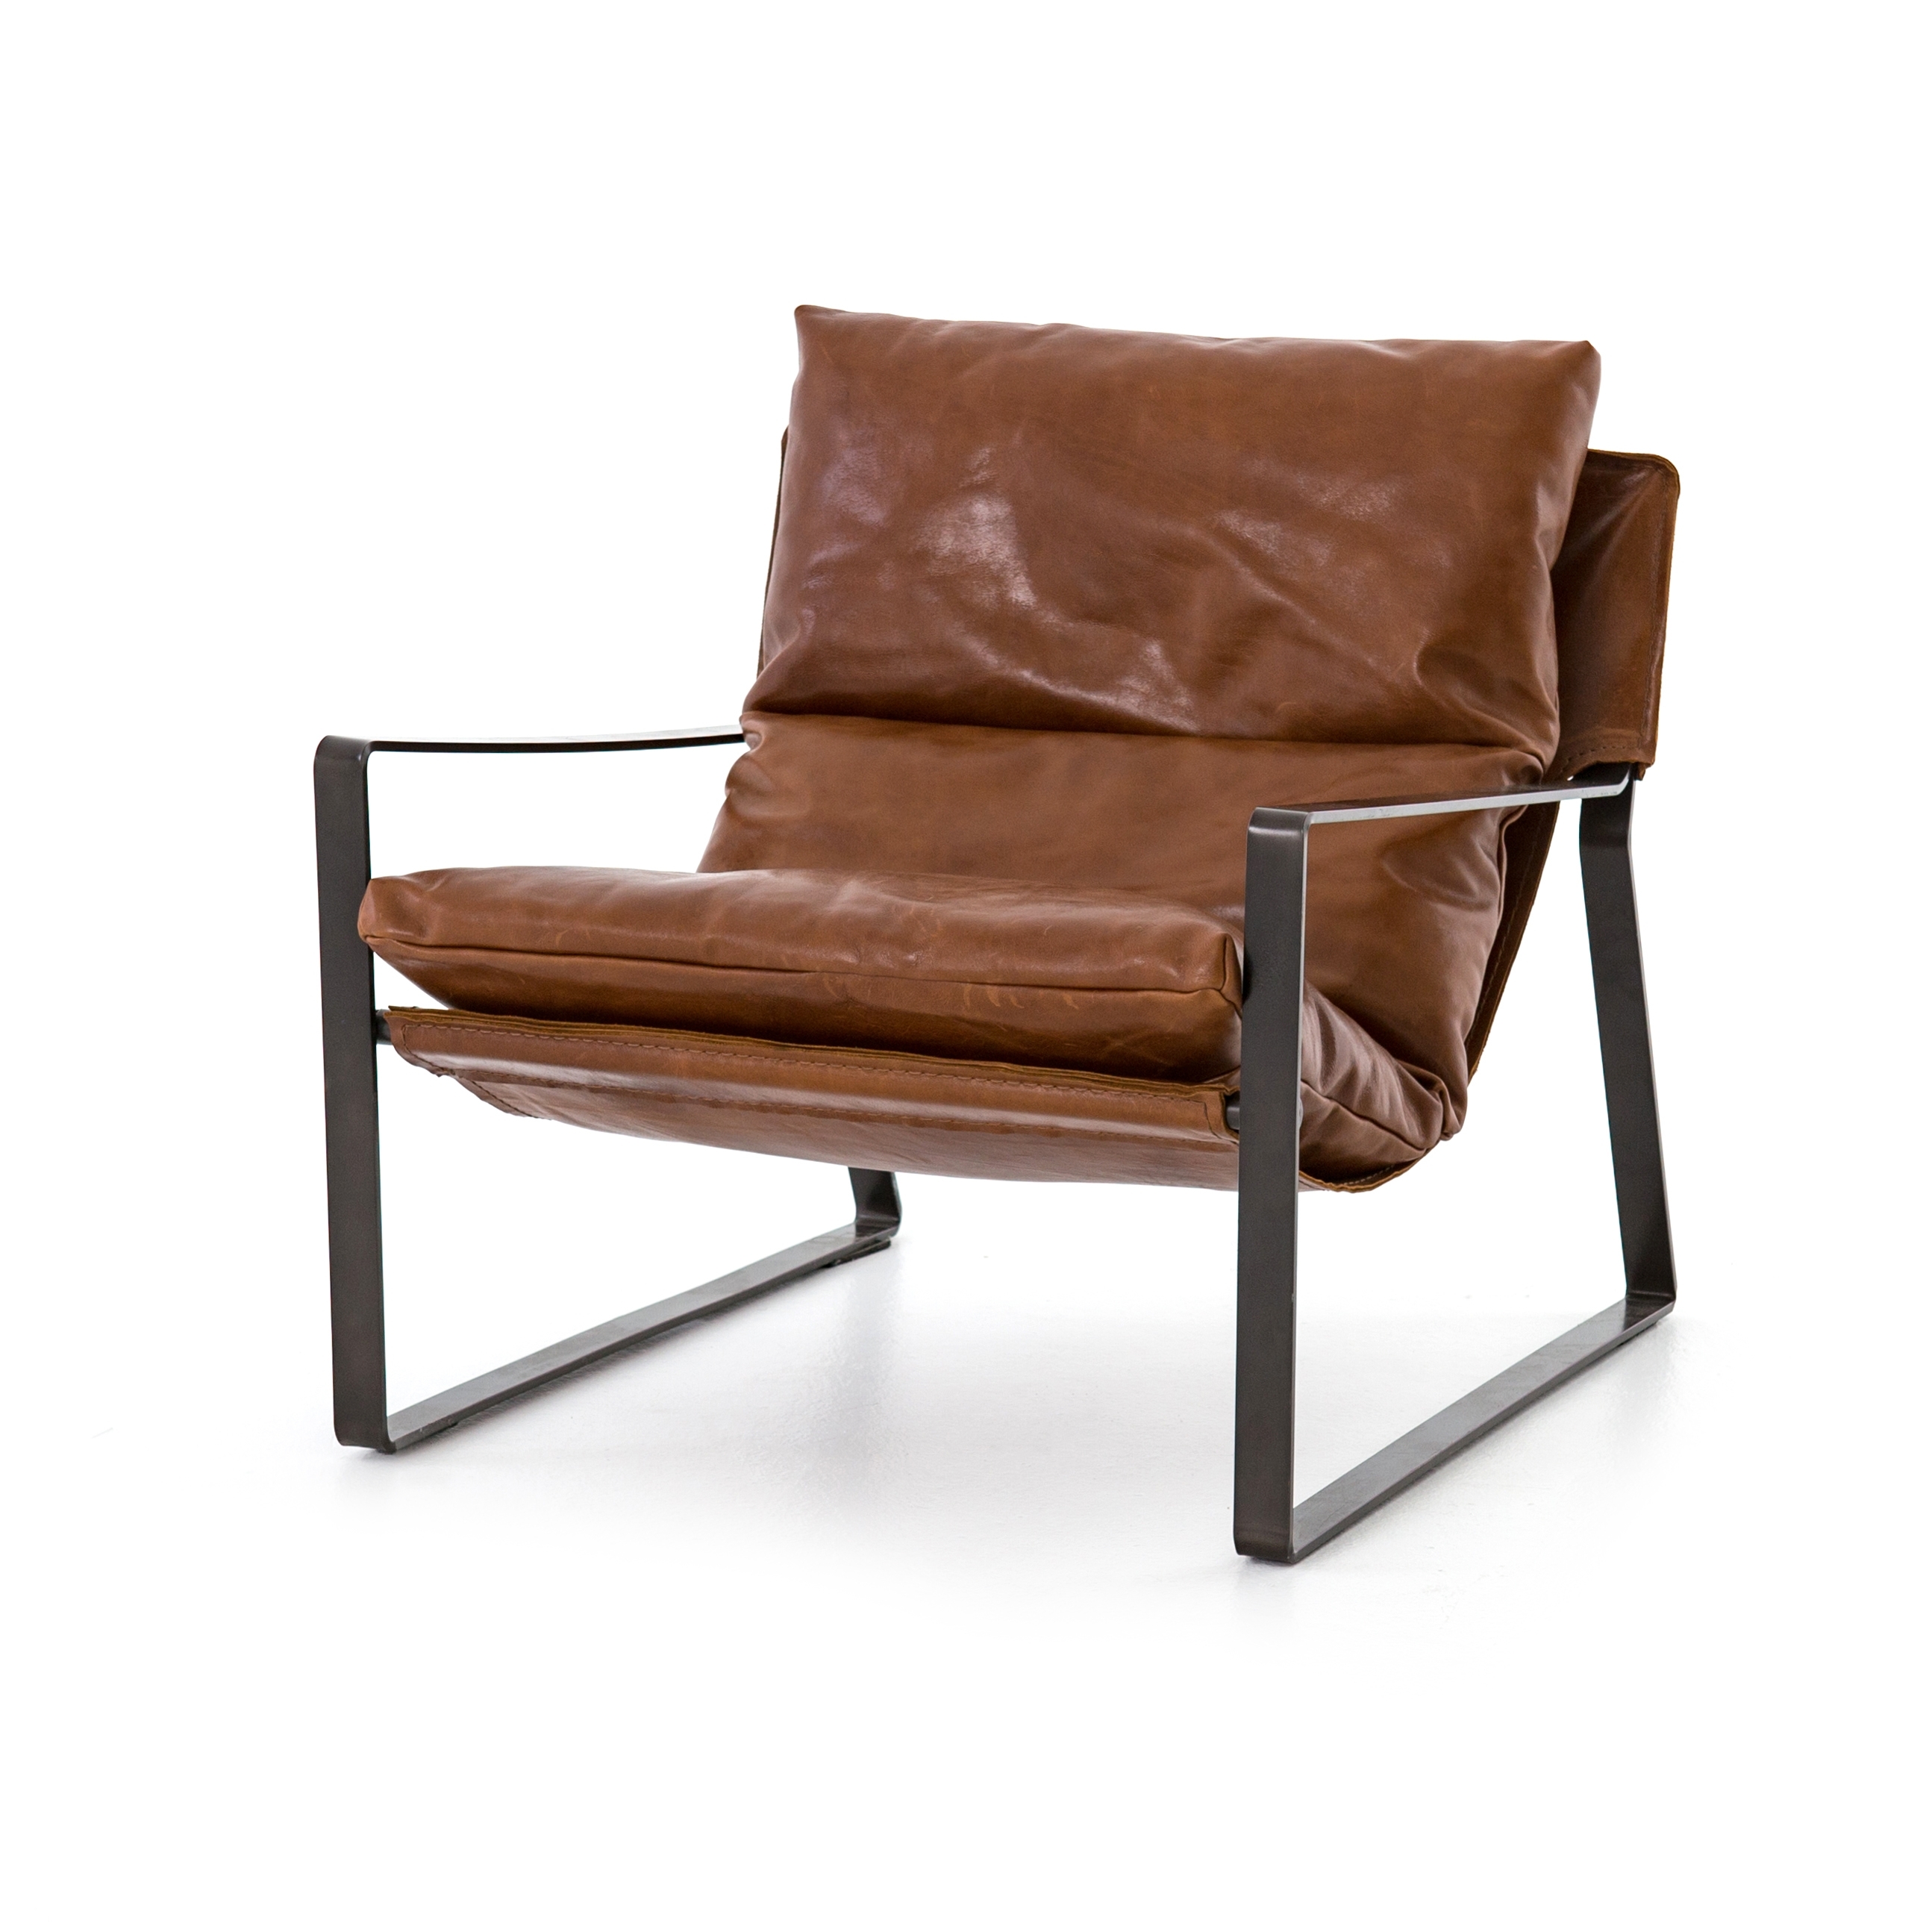 Emmett Sling Chair-Dakota Tobacco - Image 0